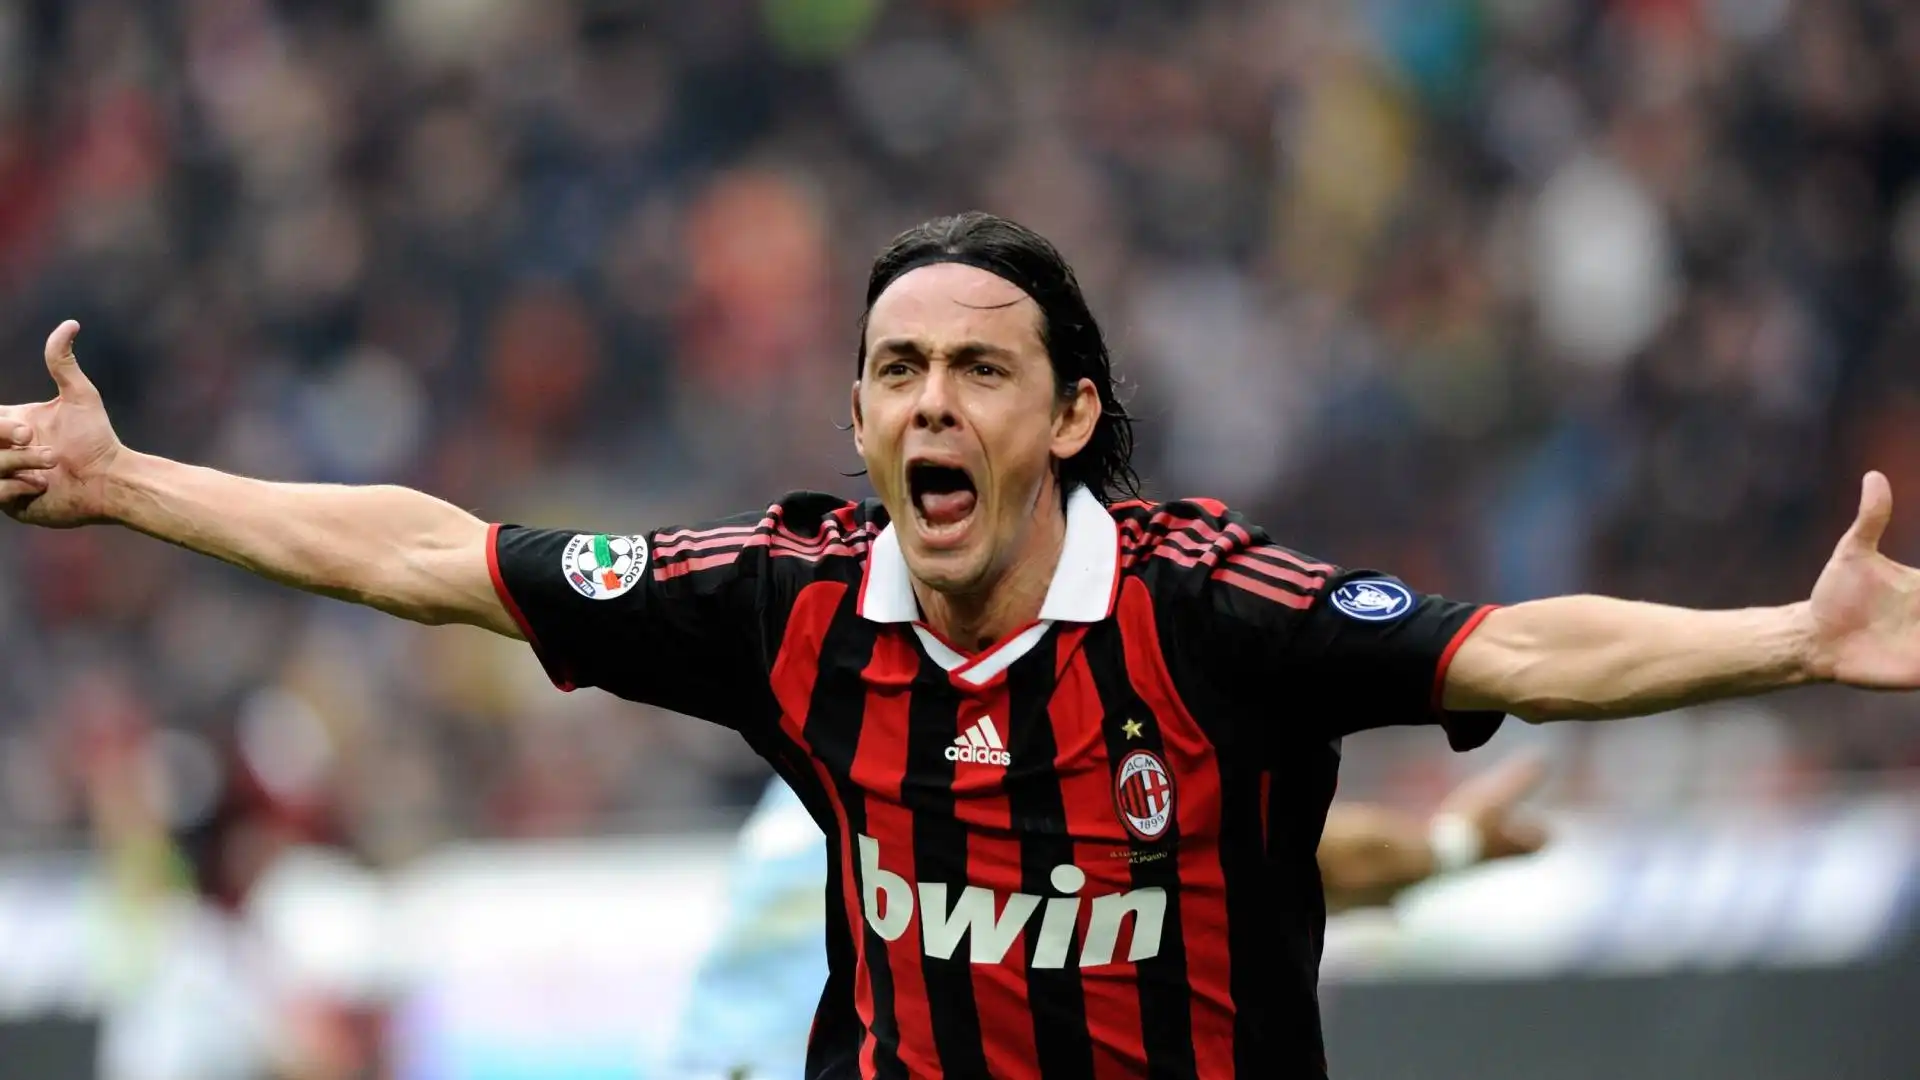 Inzaghi è stata una bandiera del Milan